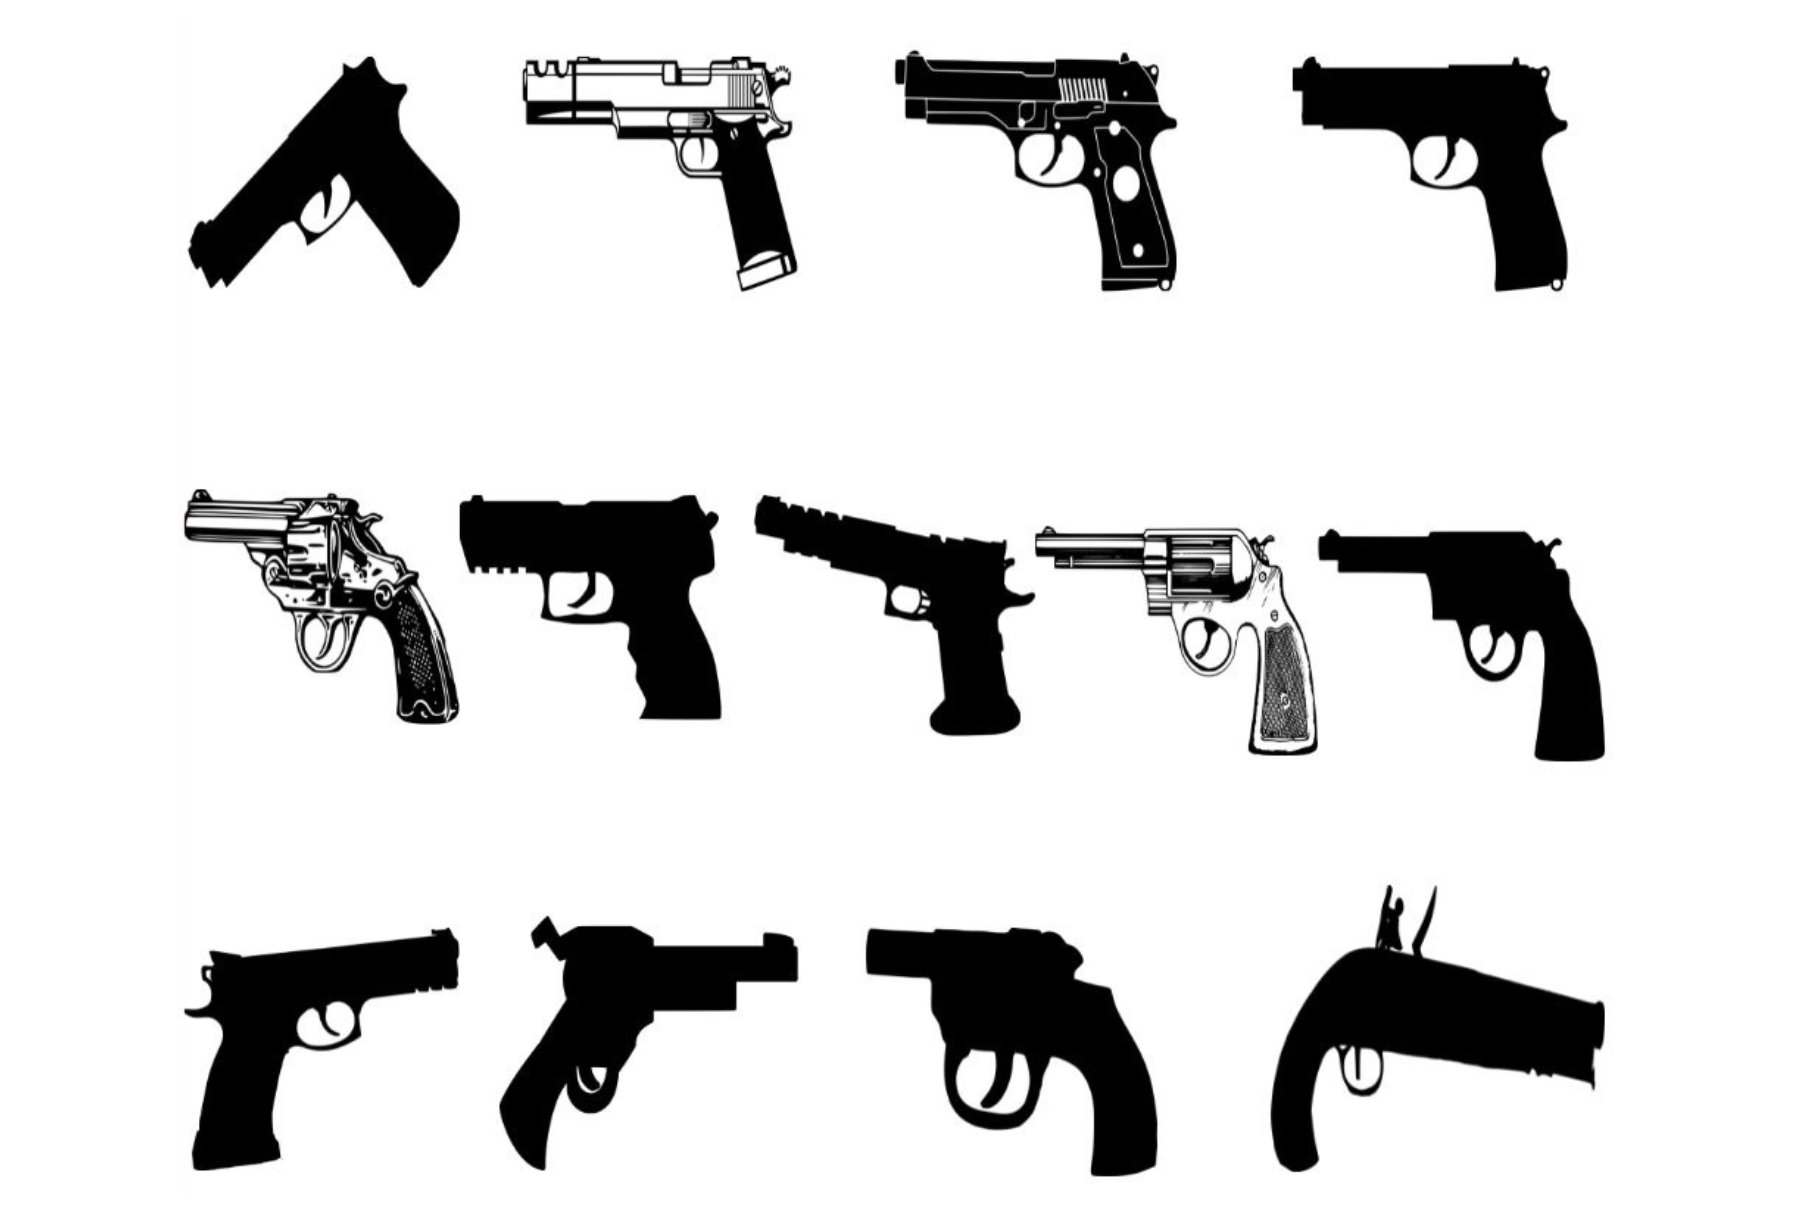 Pistol Silhouette cover image.